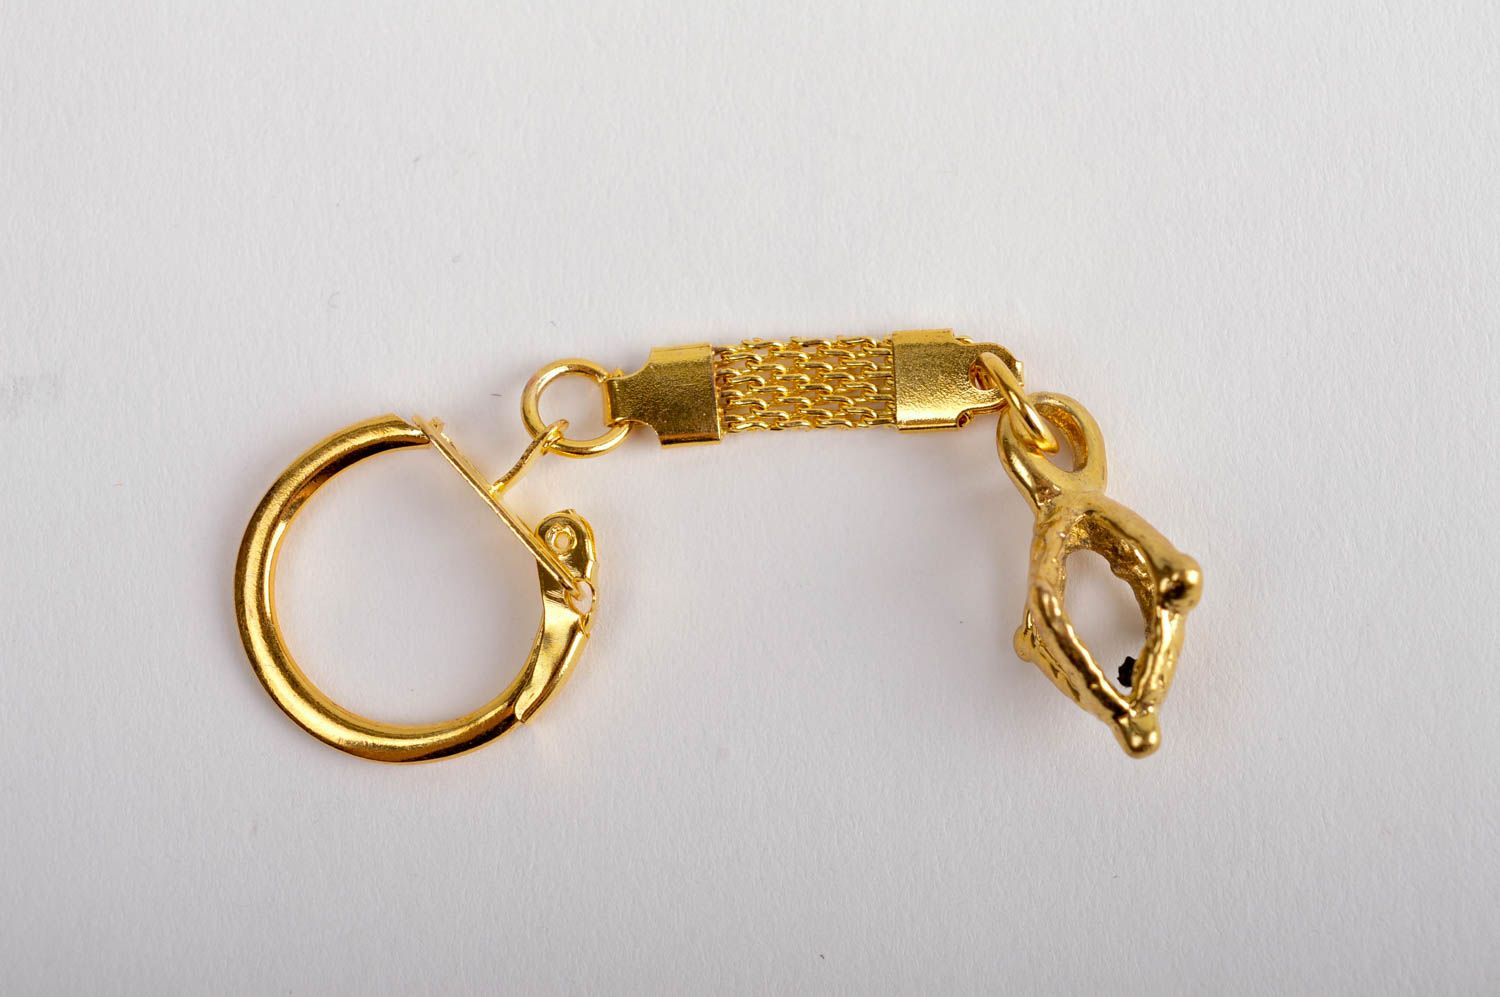 Beautiful handmade metal keychain cool keyrings metal craft handmade accessories photo 2